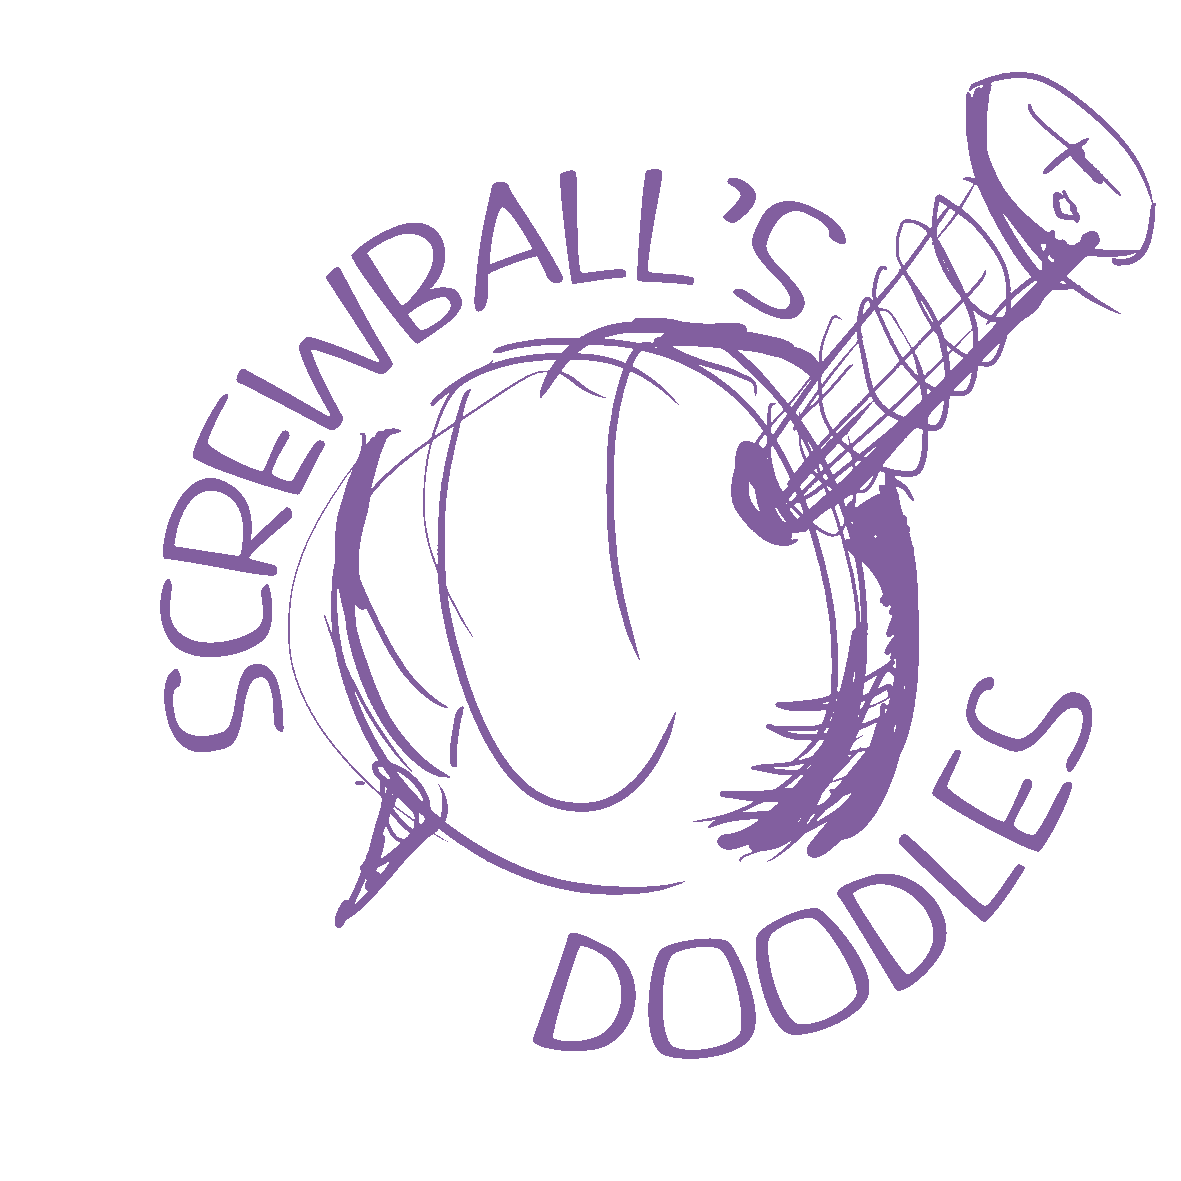 ScrewBallsDoodles